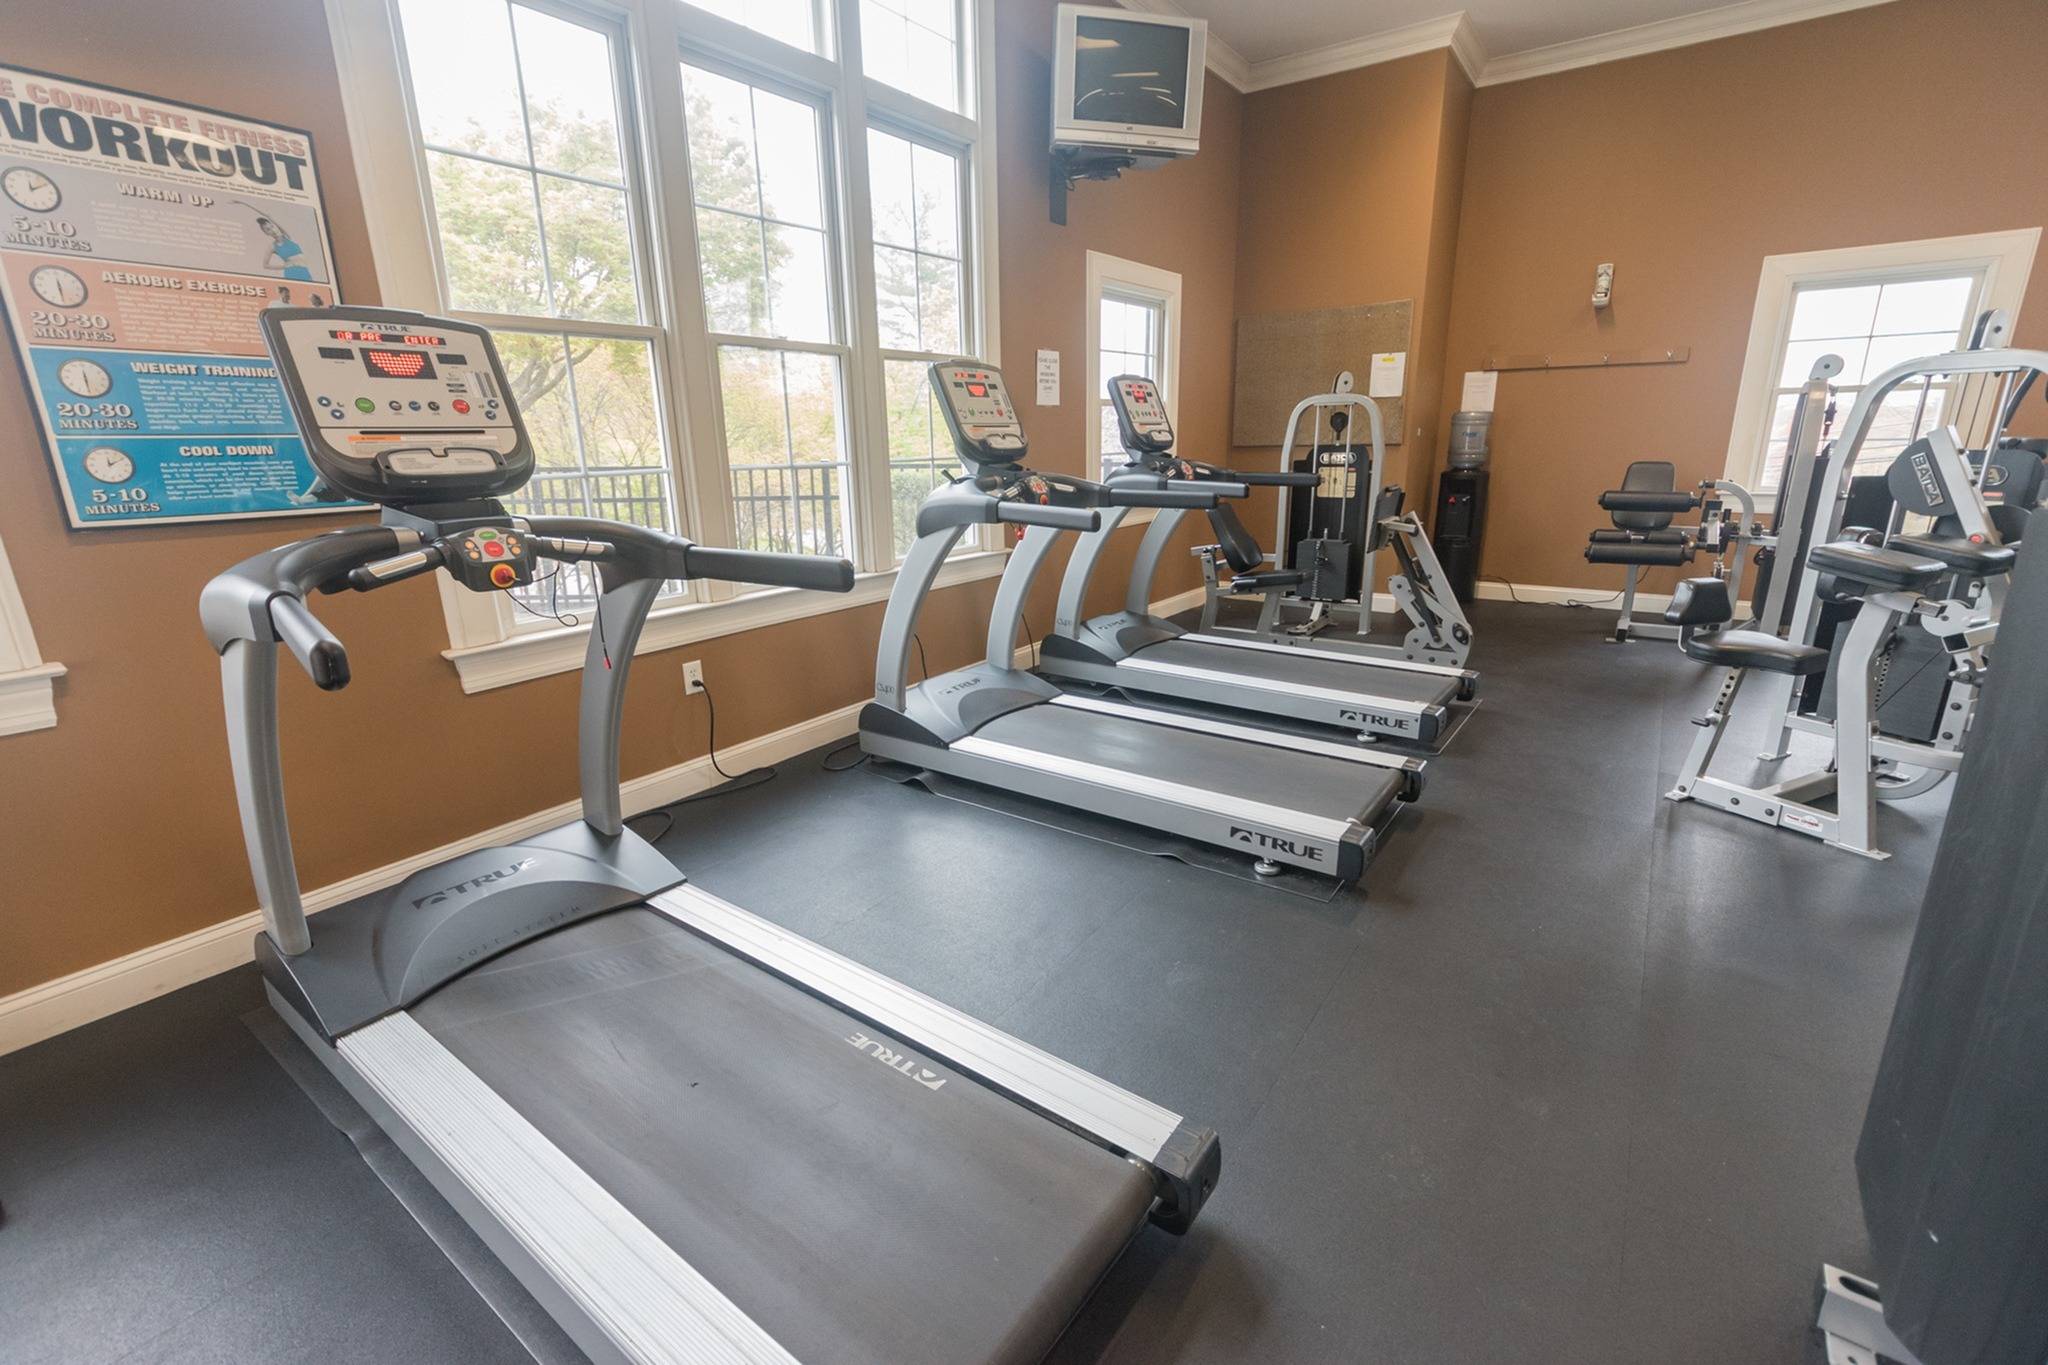 3 treadmills inside a gym facing large windows.